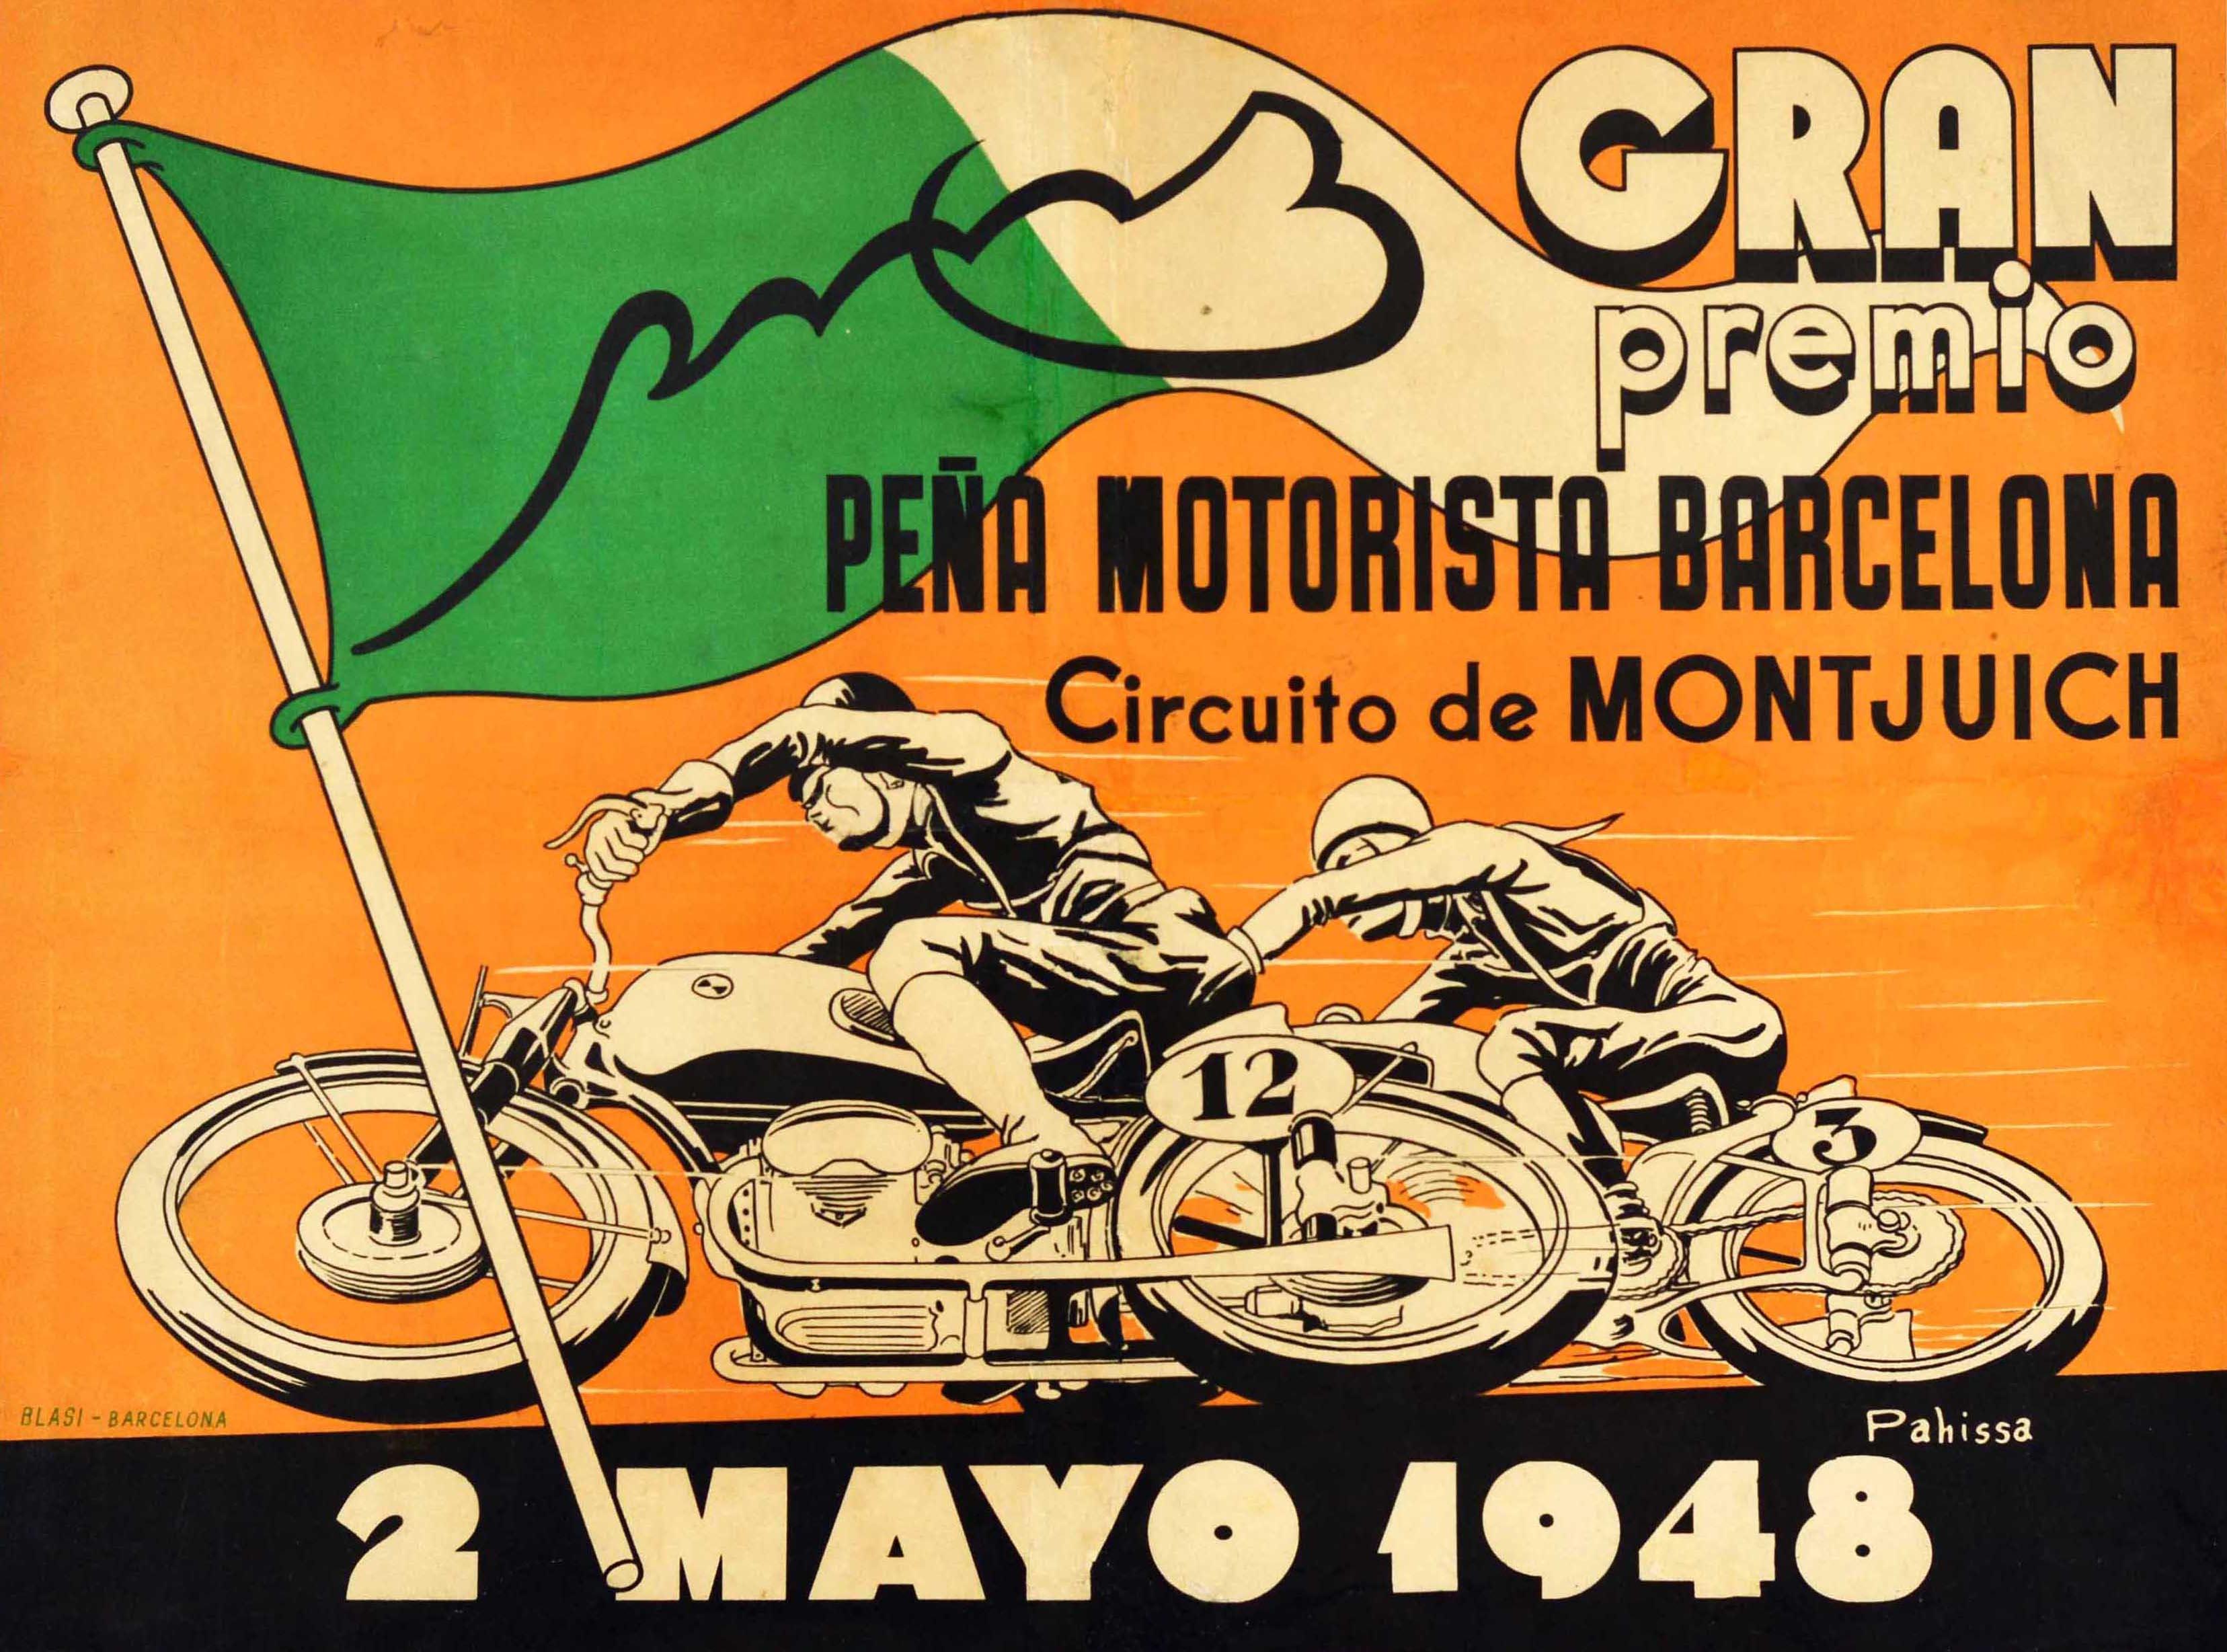 Original Vintage Motorsport Poster Gran Premio Pena Motorista Barcelona Montjuic - Print by Pahissa